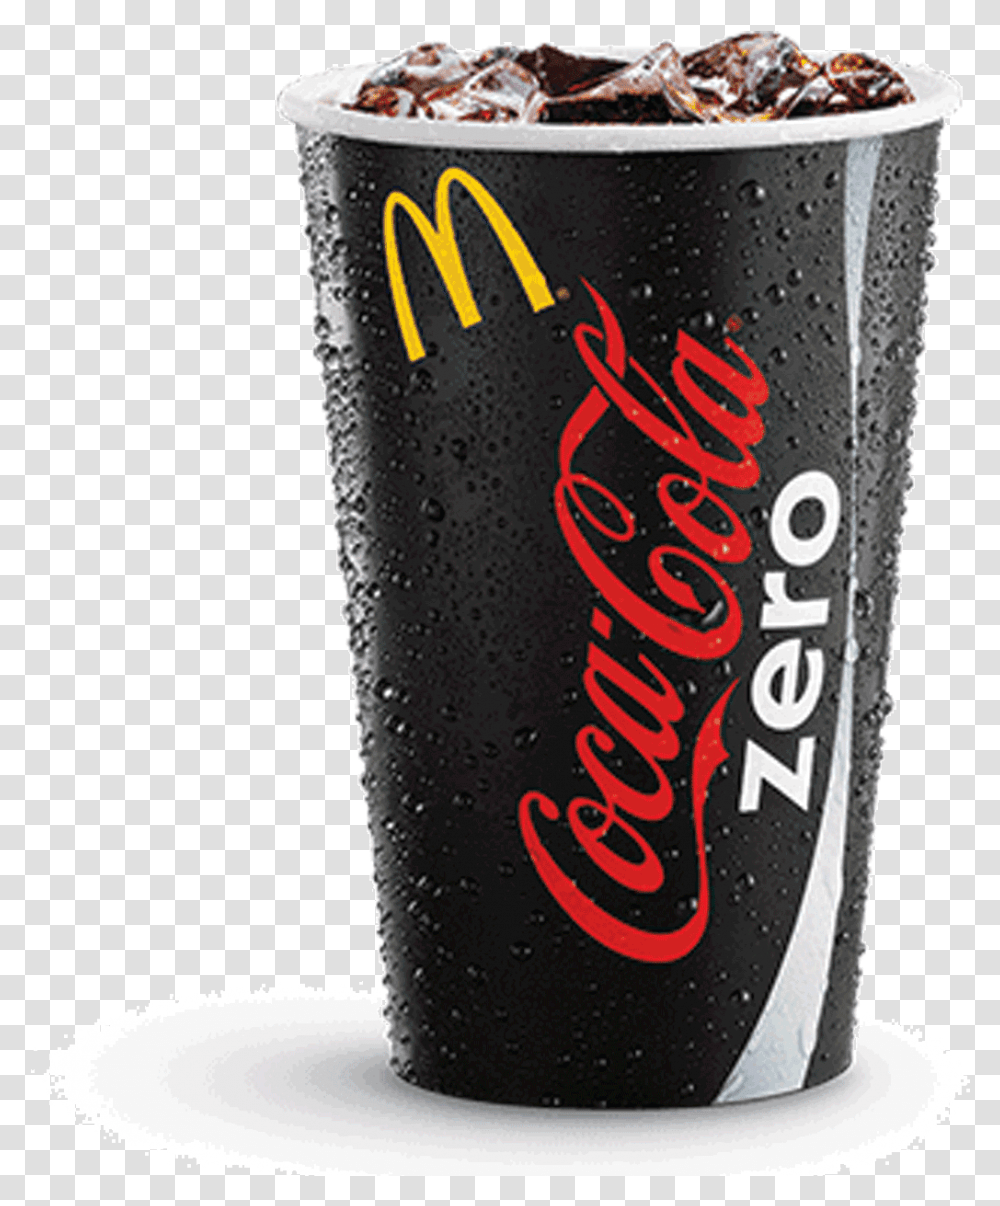 Download Menu Coke Zero Much Sugar In A Can Of Coke Coca Cola, Beverage, Drink, Soda, Wedding Cake Transparent Png